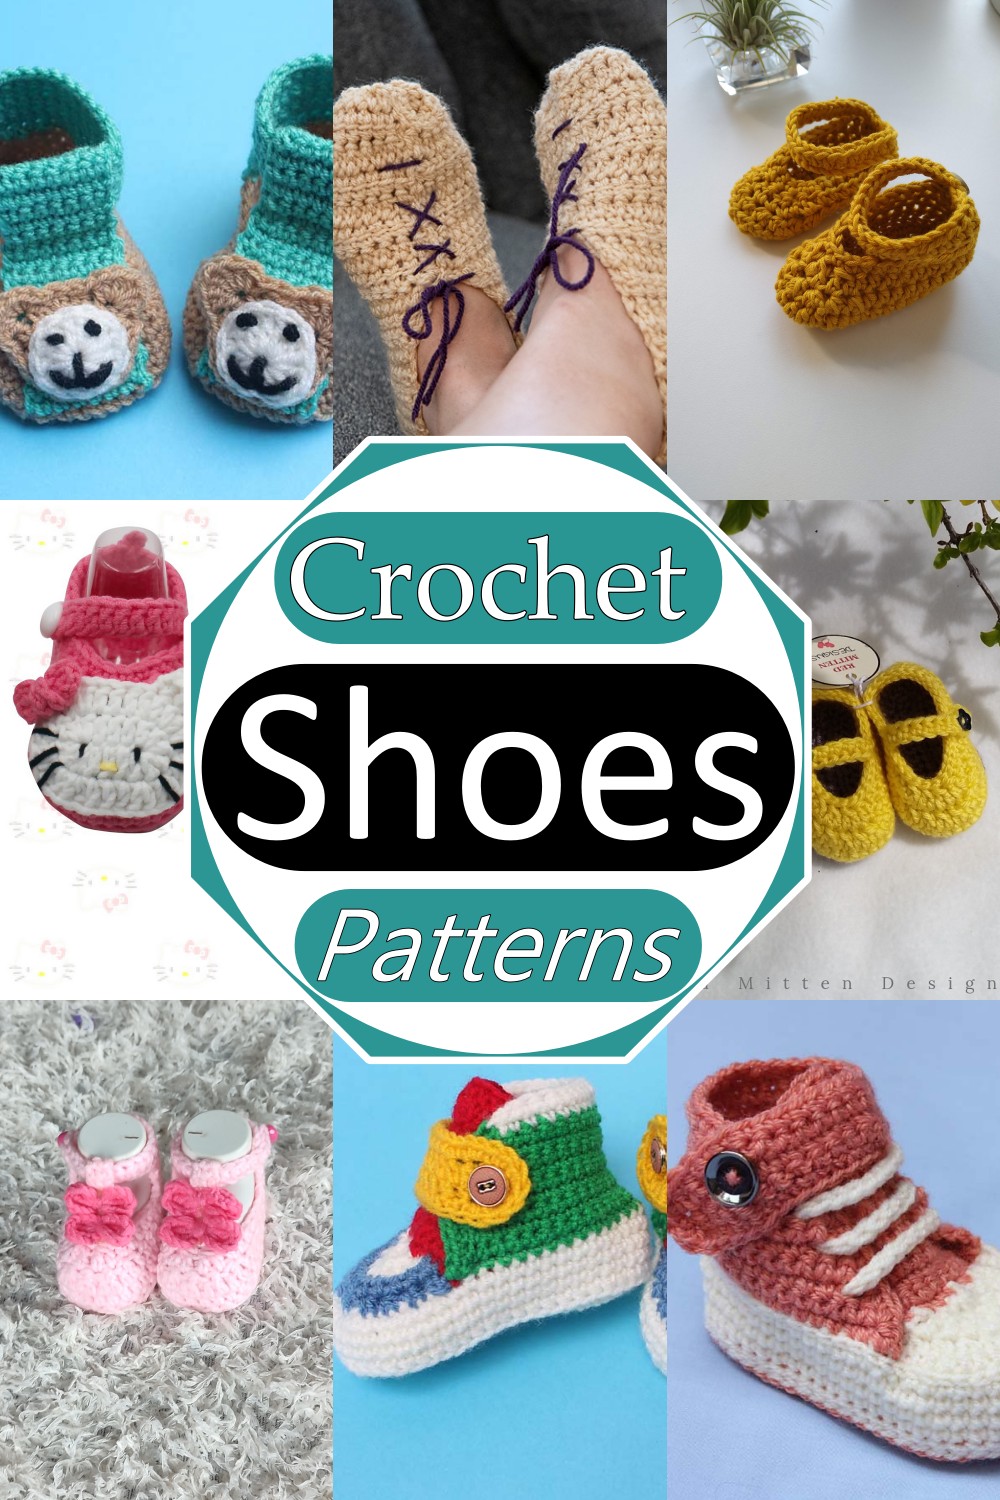 Crochet Shoes Patterns